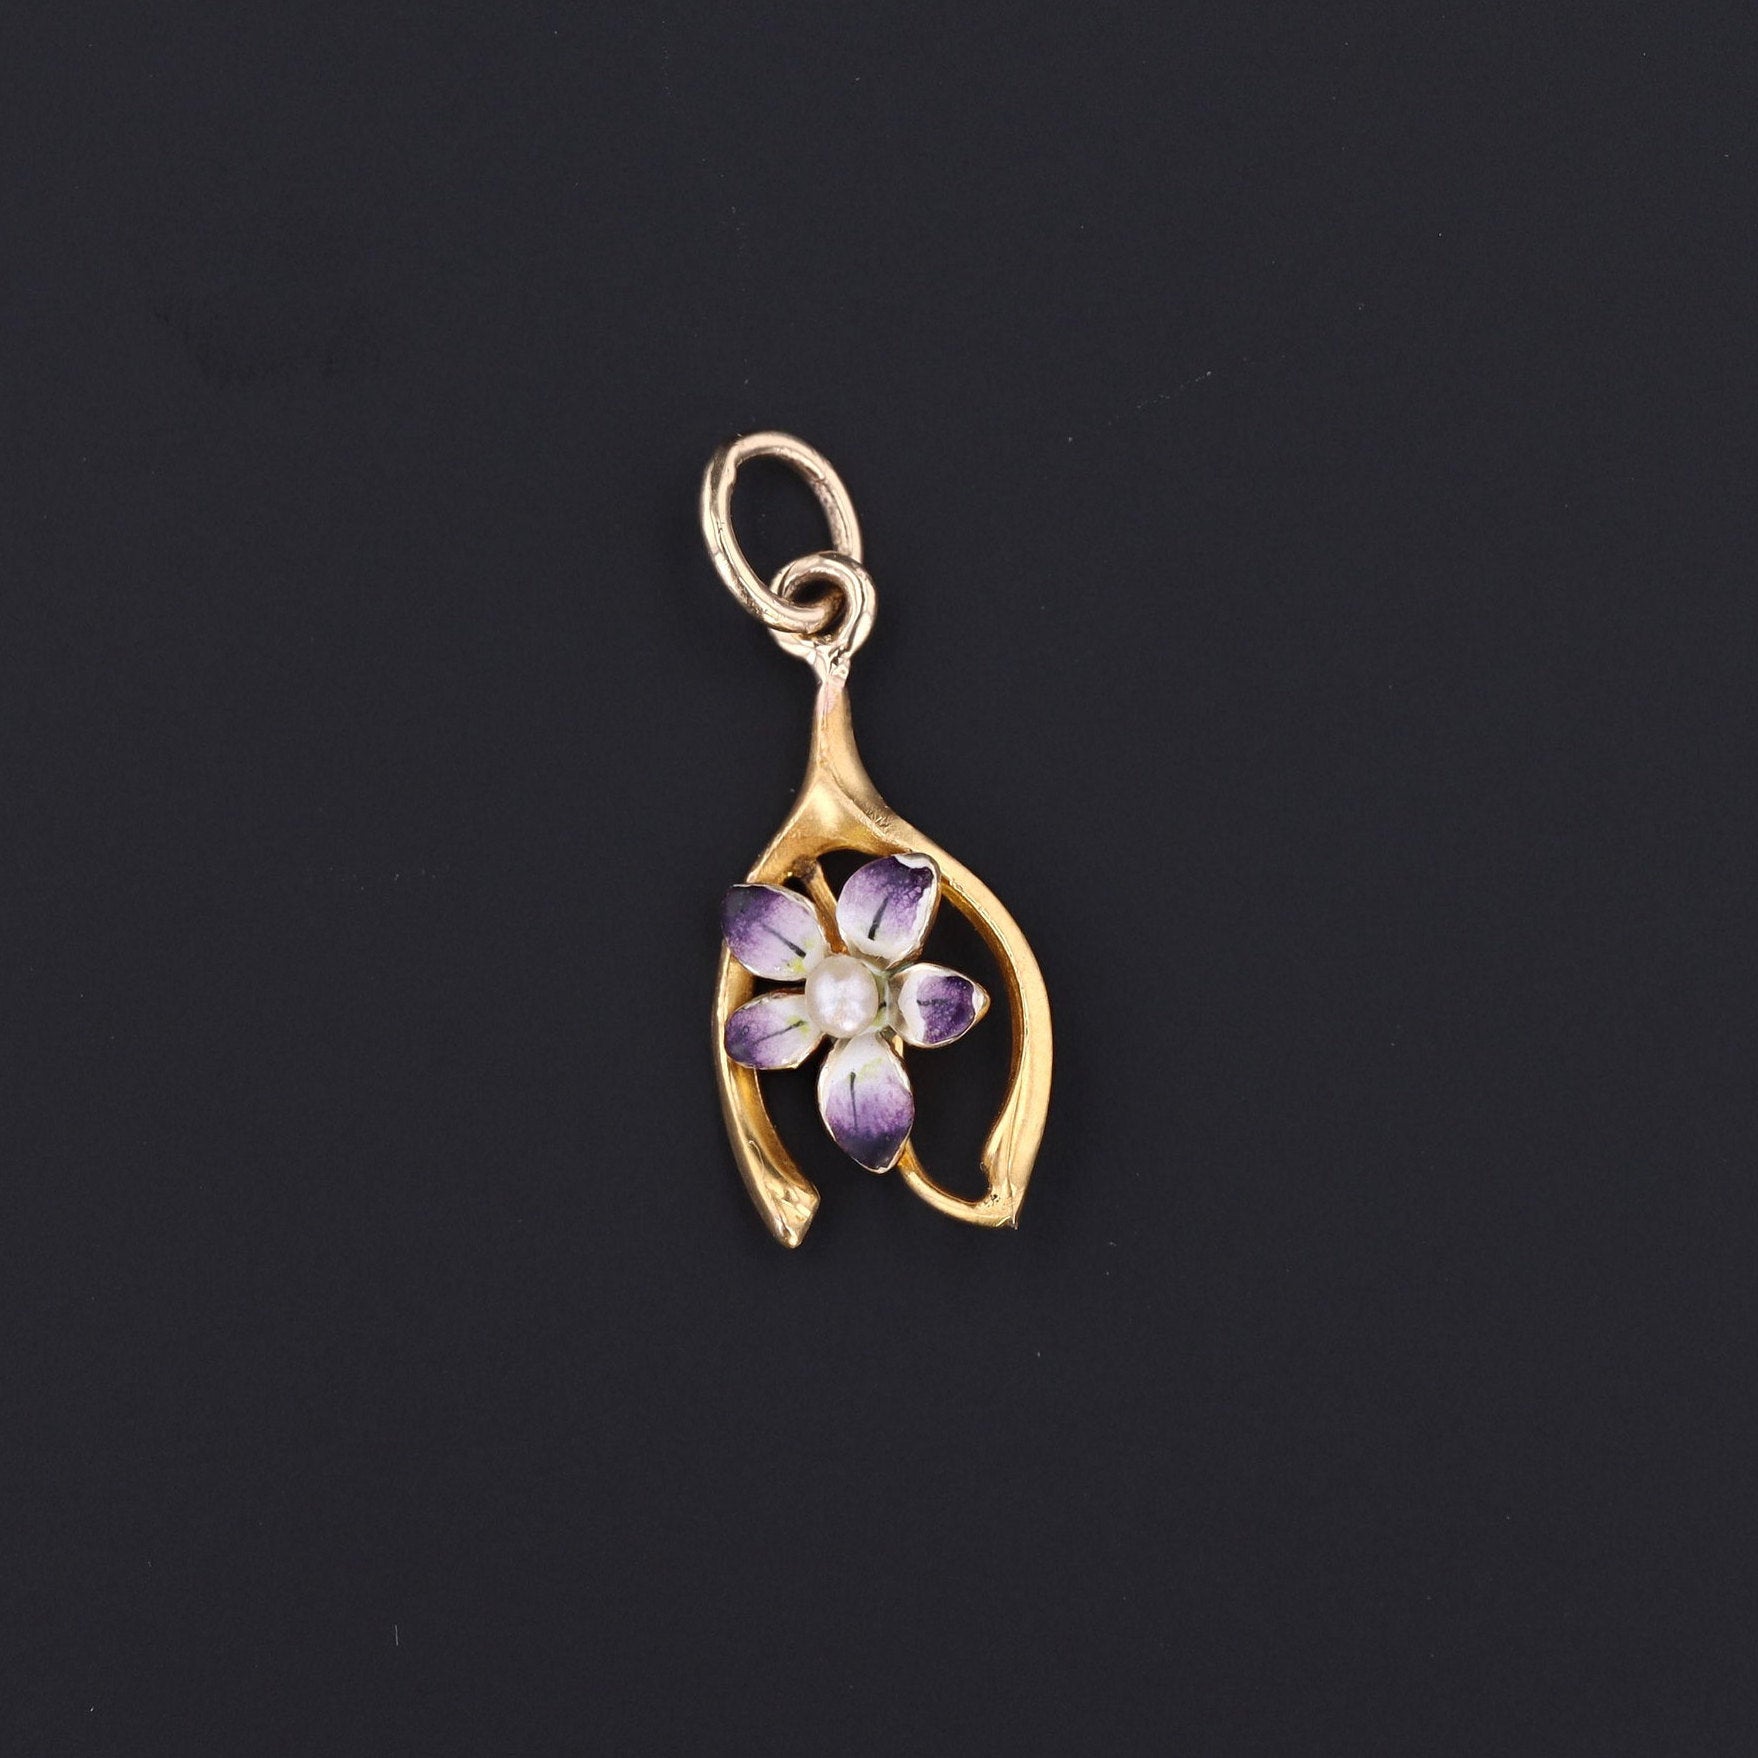 Antique Violet Wishbone Charm | Good Luck Charm | Antique Pin Conversion | 10k Gold Charm | Enamel Violet Flower Charm